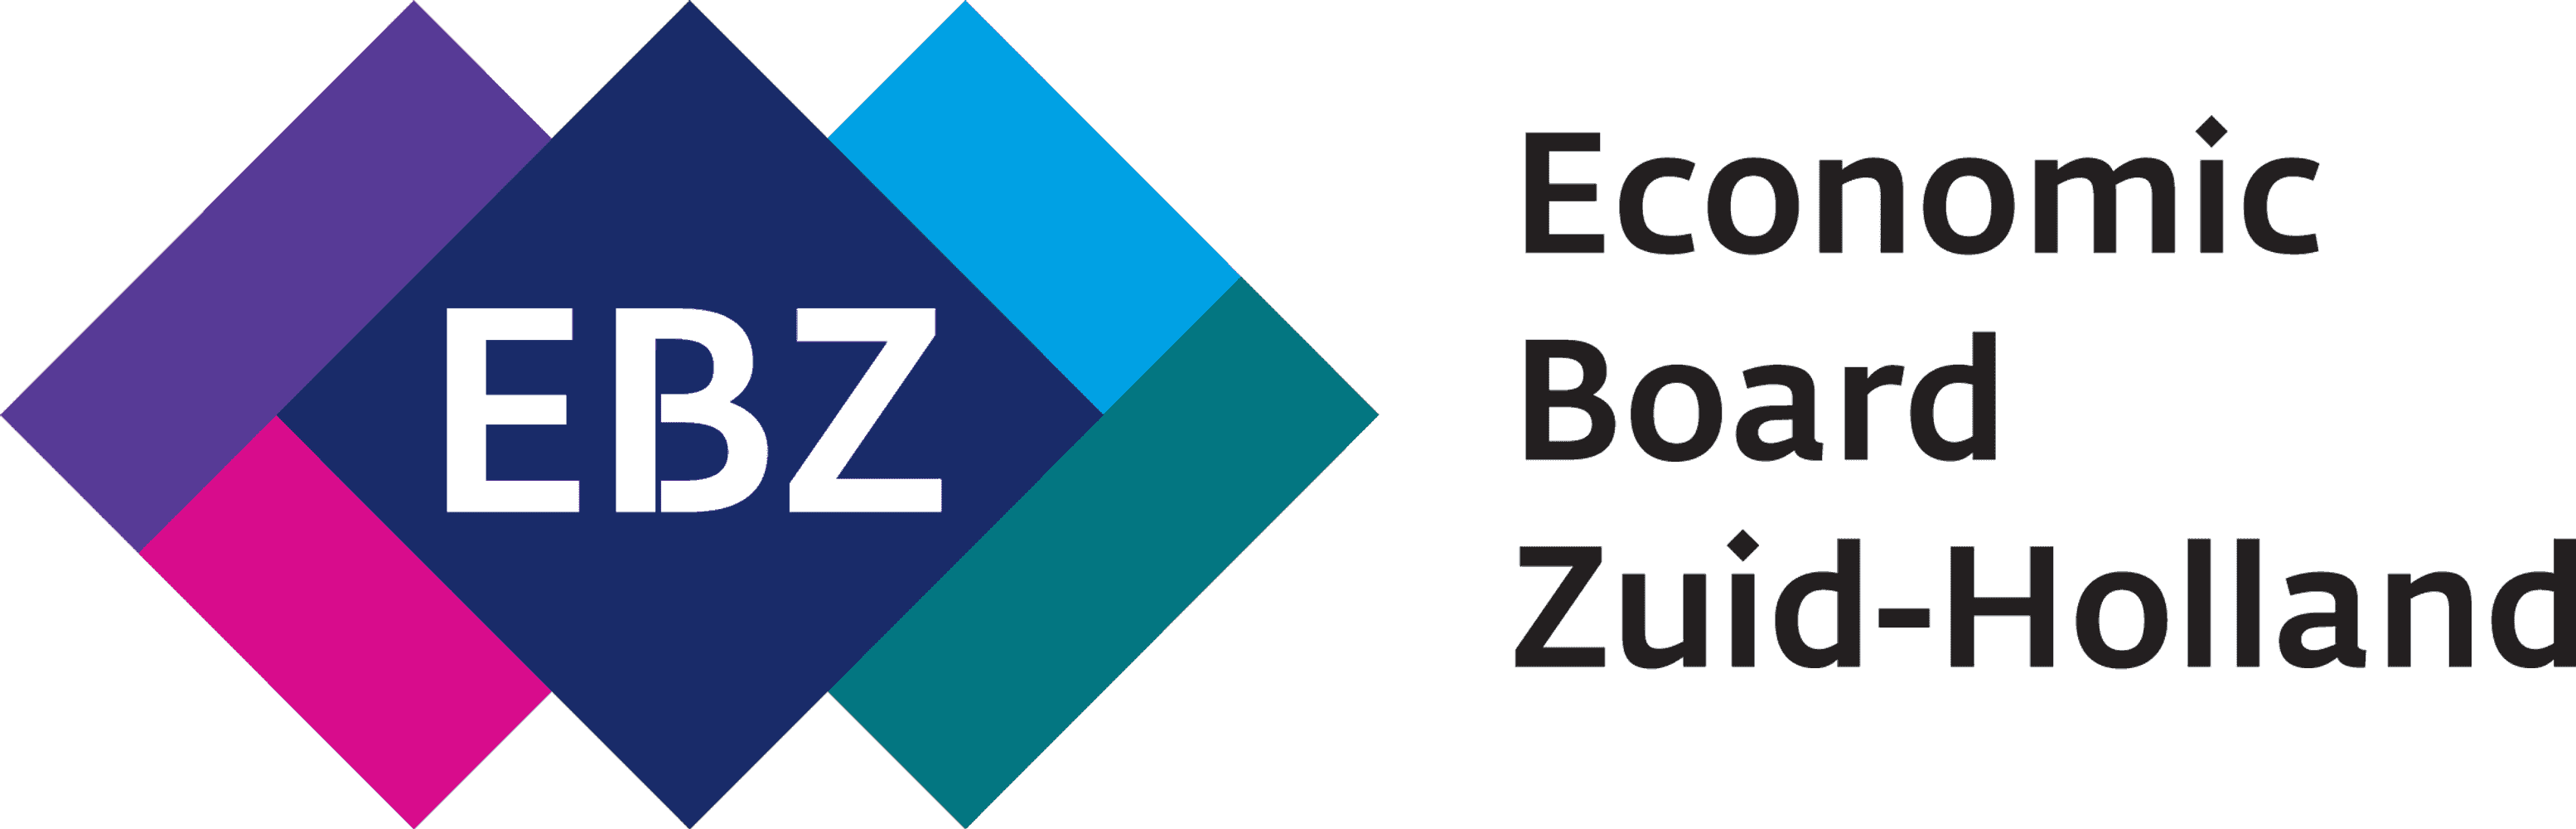 Economic Board Zuid-Holland